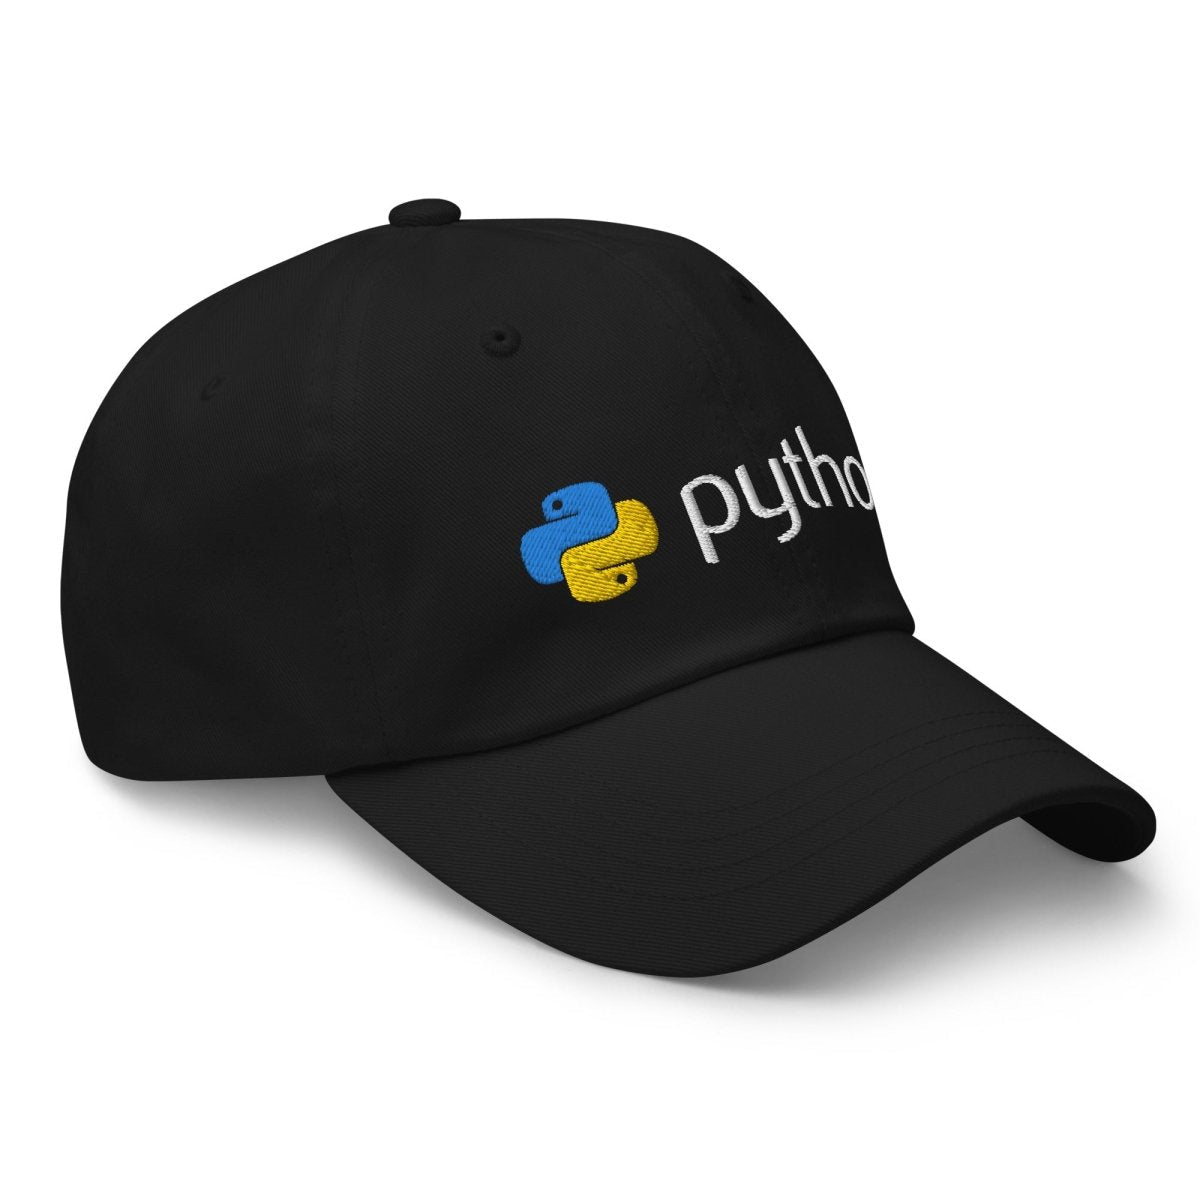 Python Logo Embroidered Cap - Black - AI Store